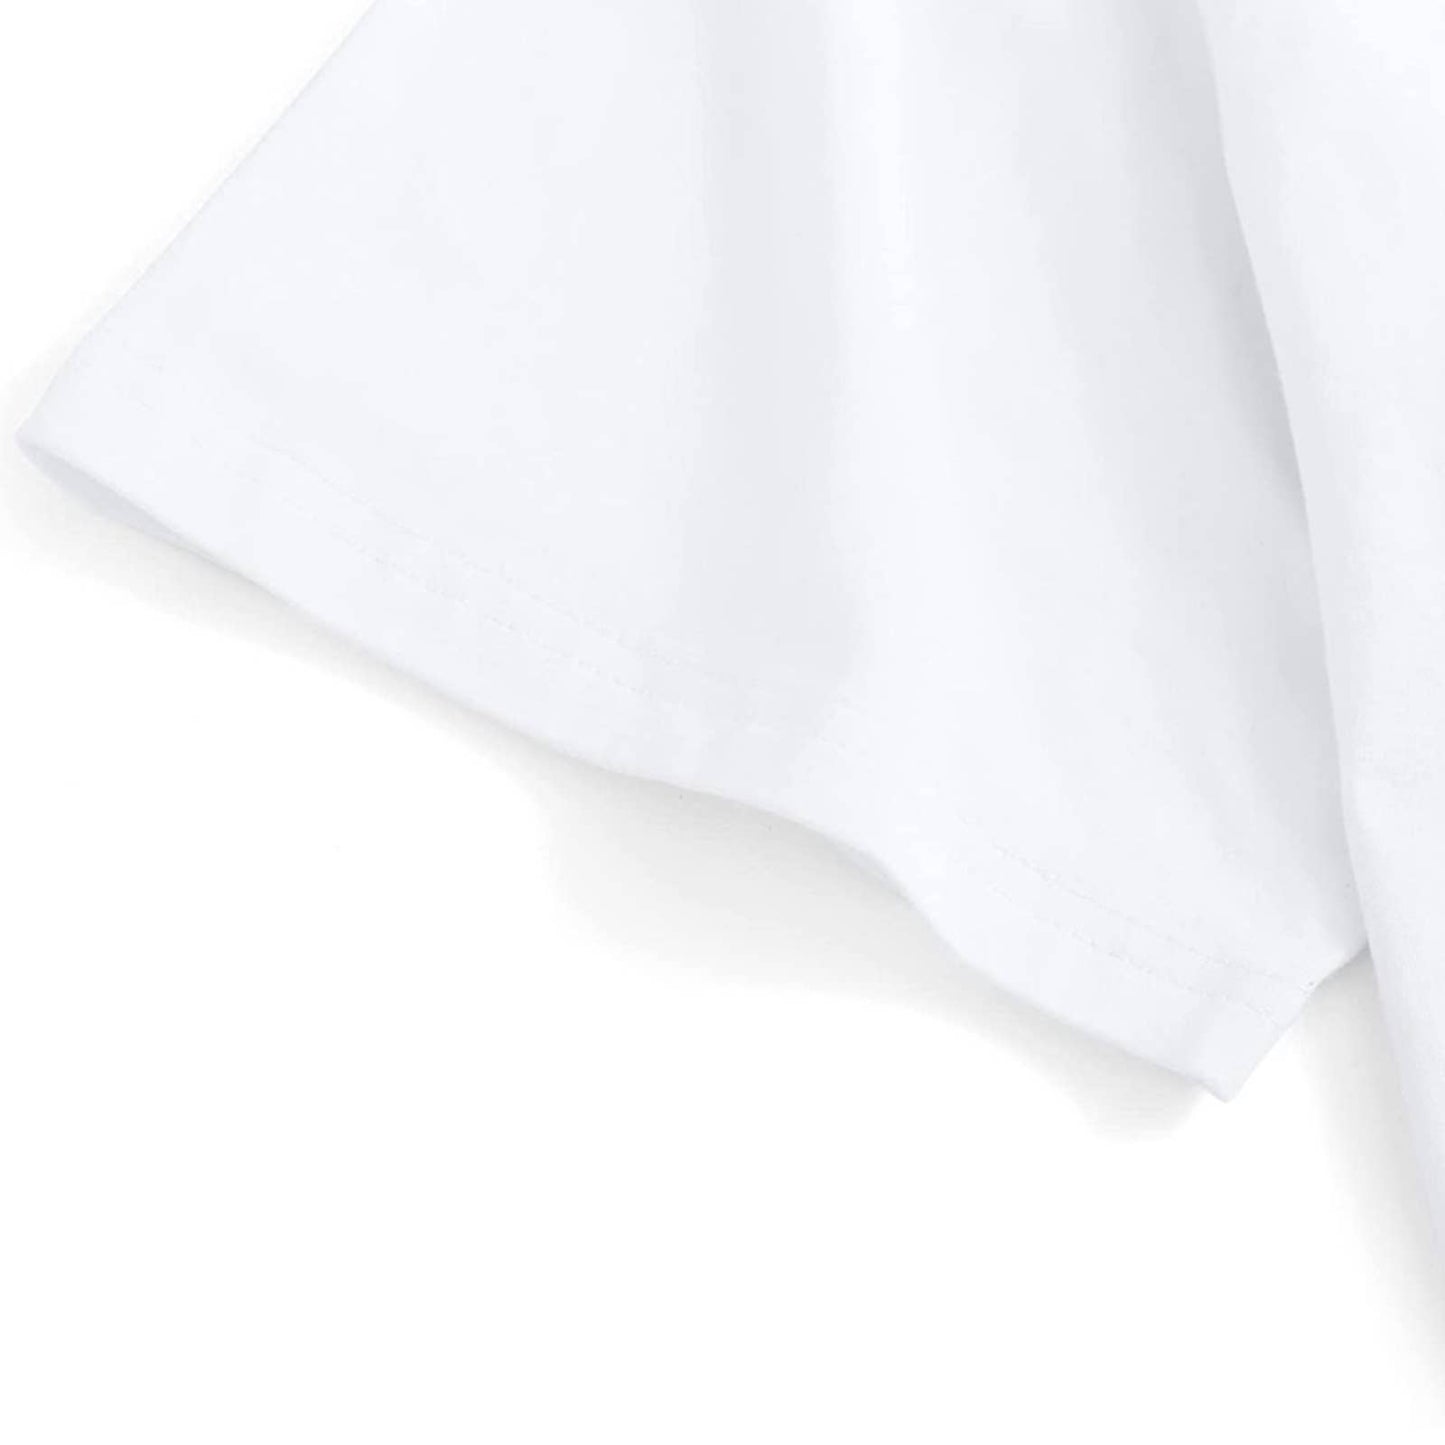 KESIHAN Men's Casual Cotton Spandex Striped Crewneck T-Shirt 3XL